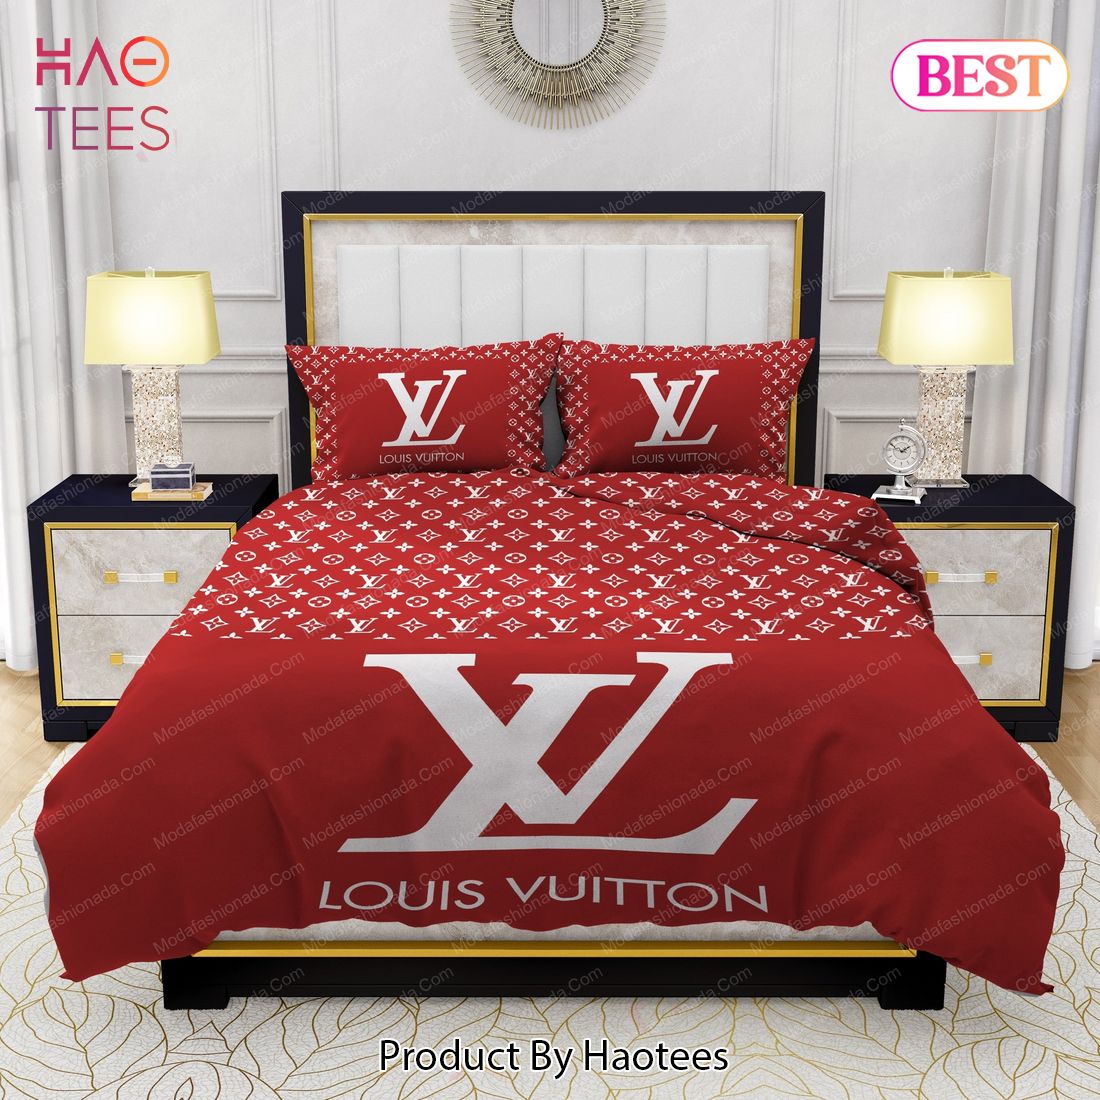 Red Background And White Pattern Louis Vuitton Bedding Sets Bed Sets, Bedroom Sets, Comforter Sets, Duvet Cover, Bedspread